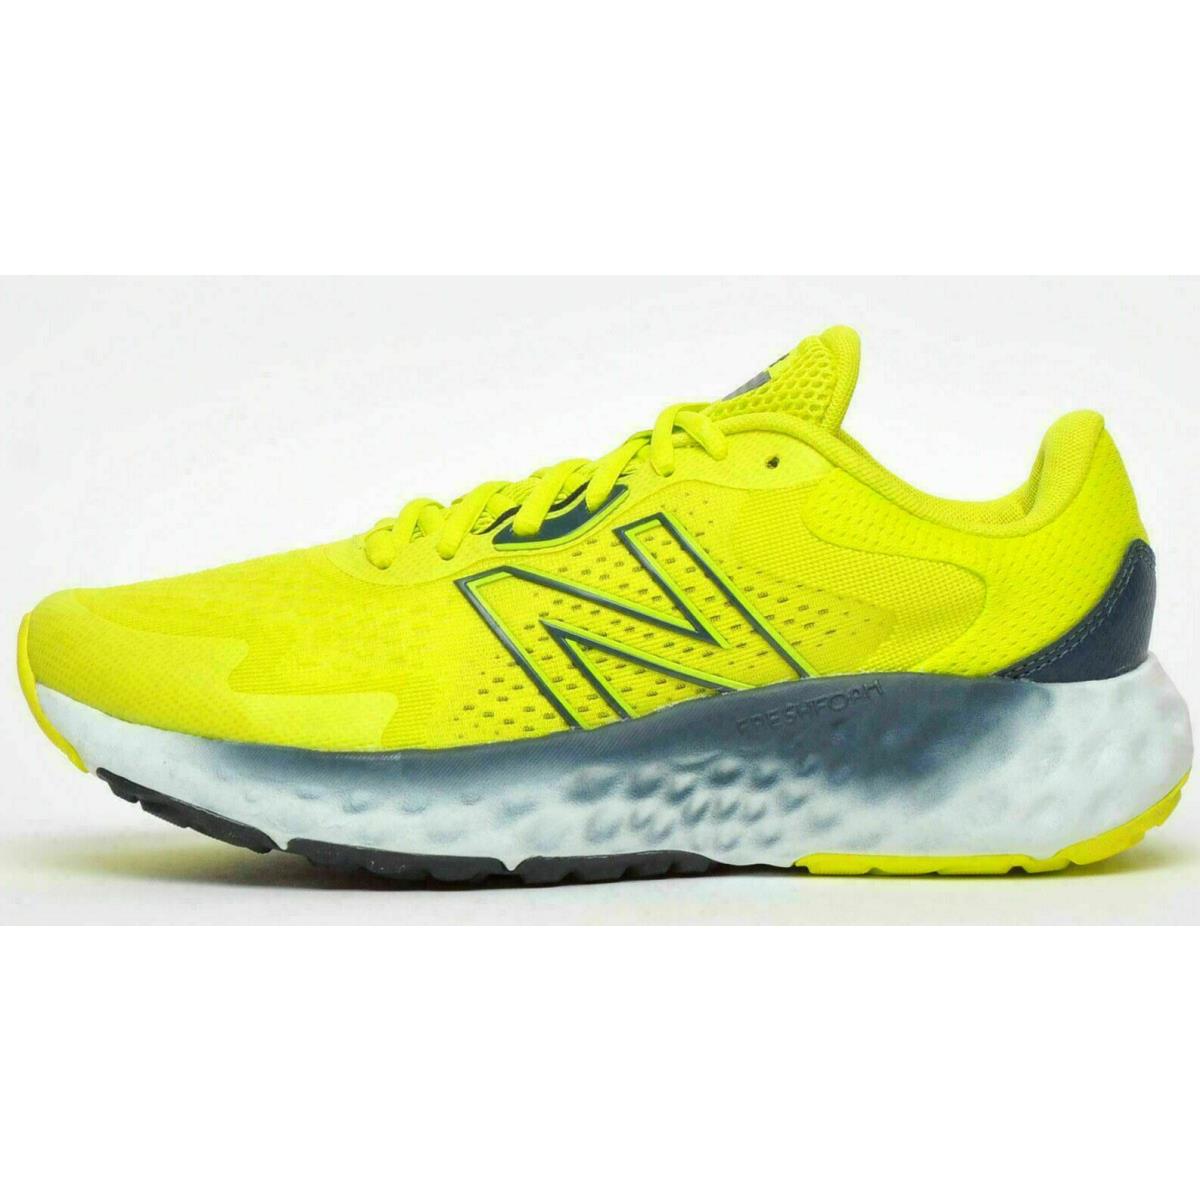 Balance Fresh Foam Evoz Men`s Running Shoes Size 10.5 11 14 Yellow US Size 10.5 Color Yellow